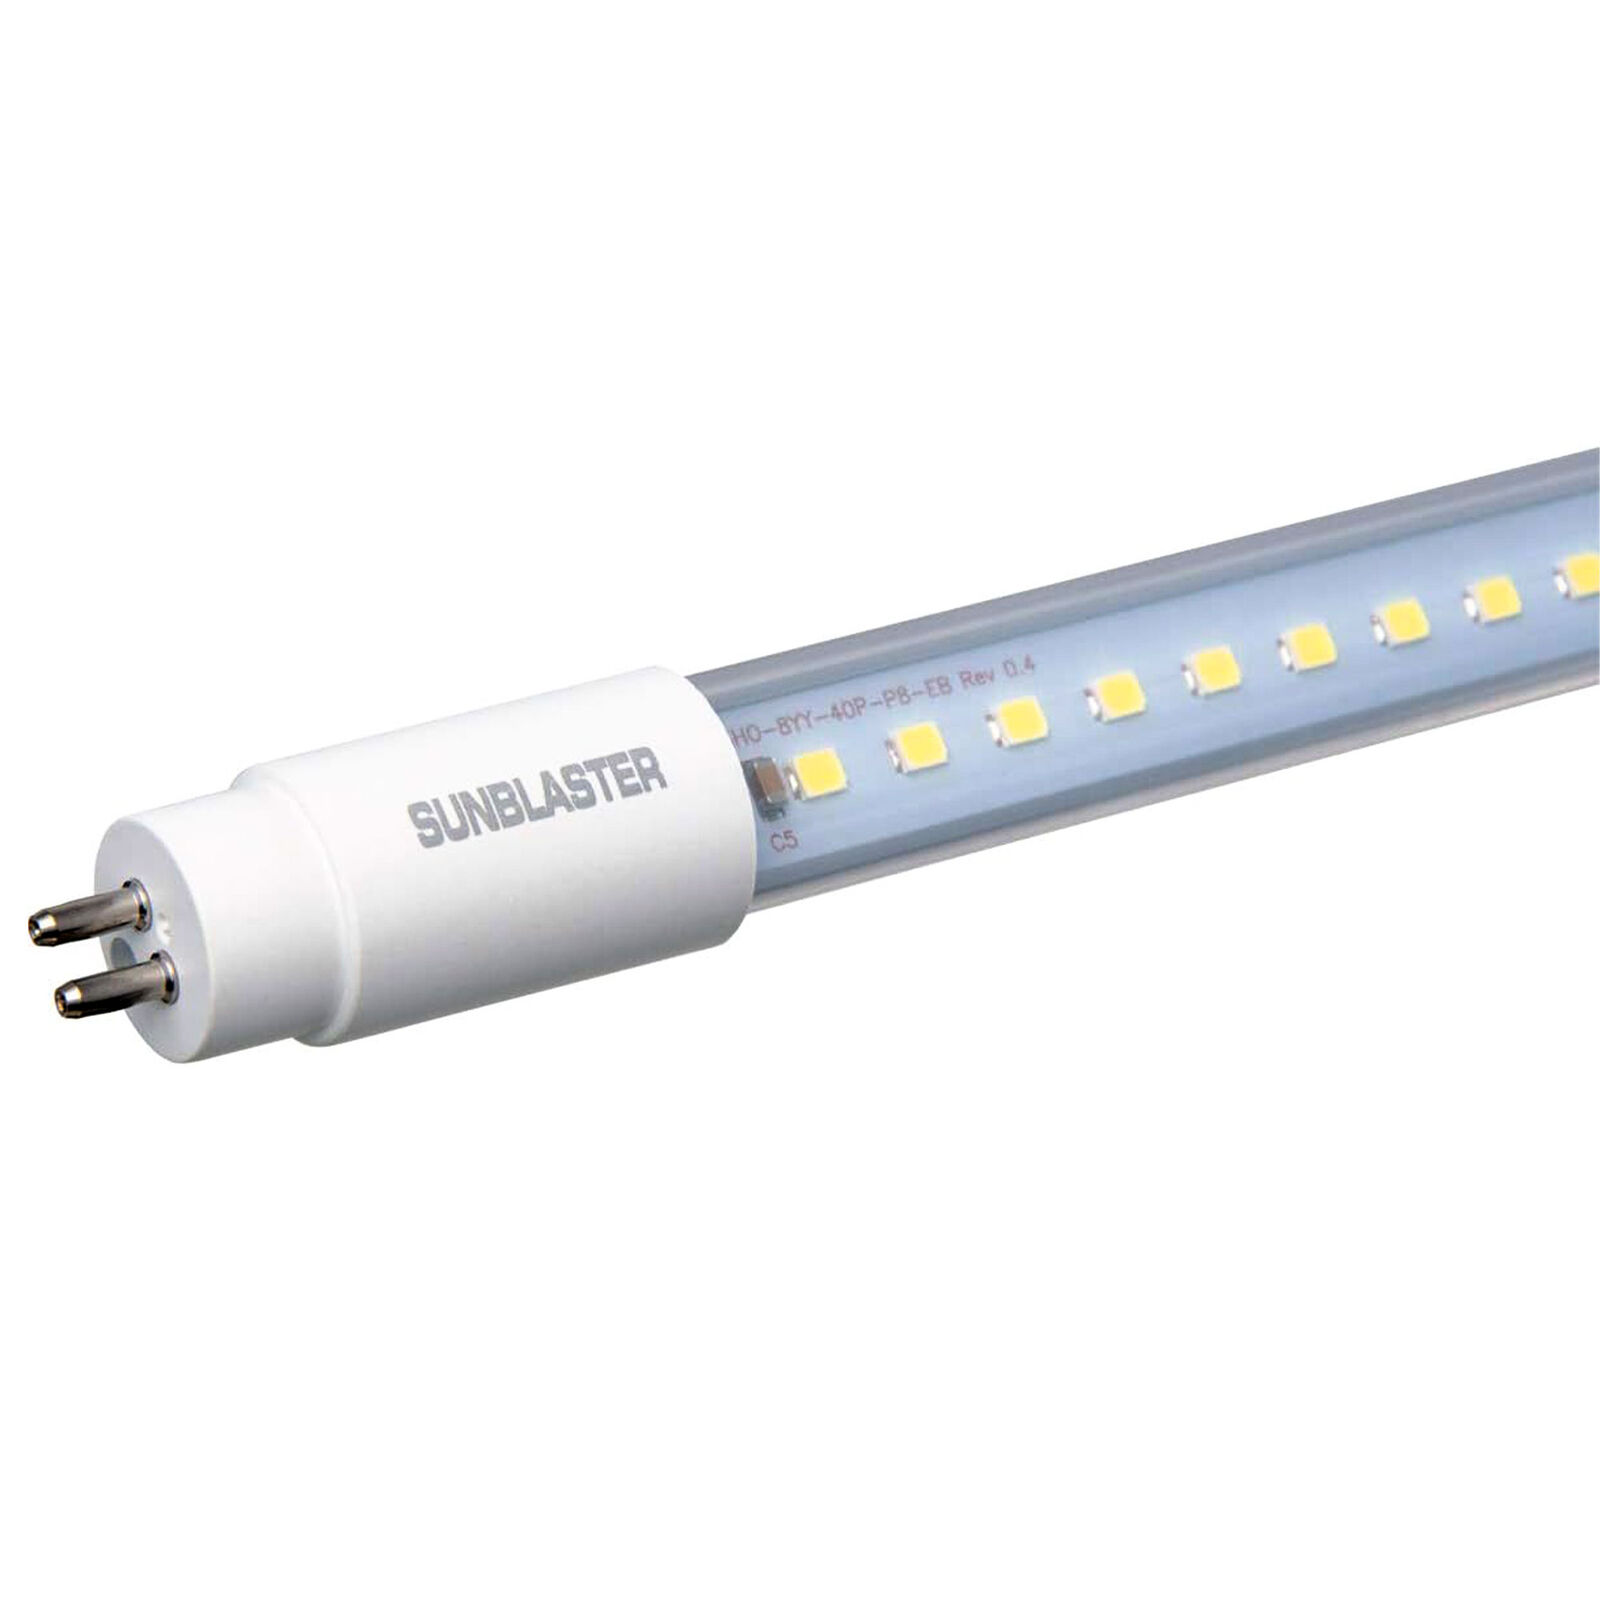 SunBlaster SL0900825 48 Inch 42 Watt 6400K T5LED Conversion Lamp Tube, White